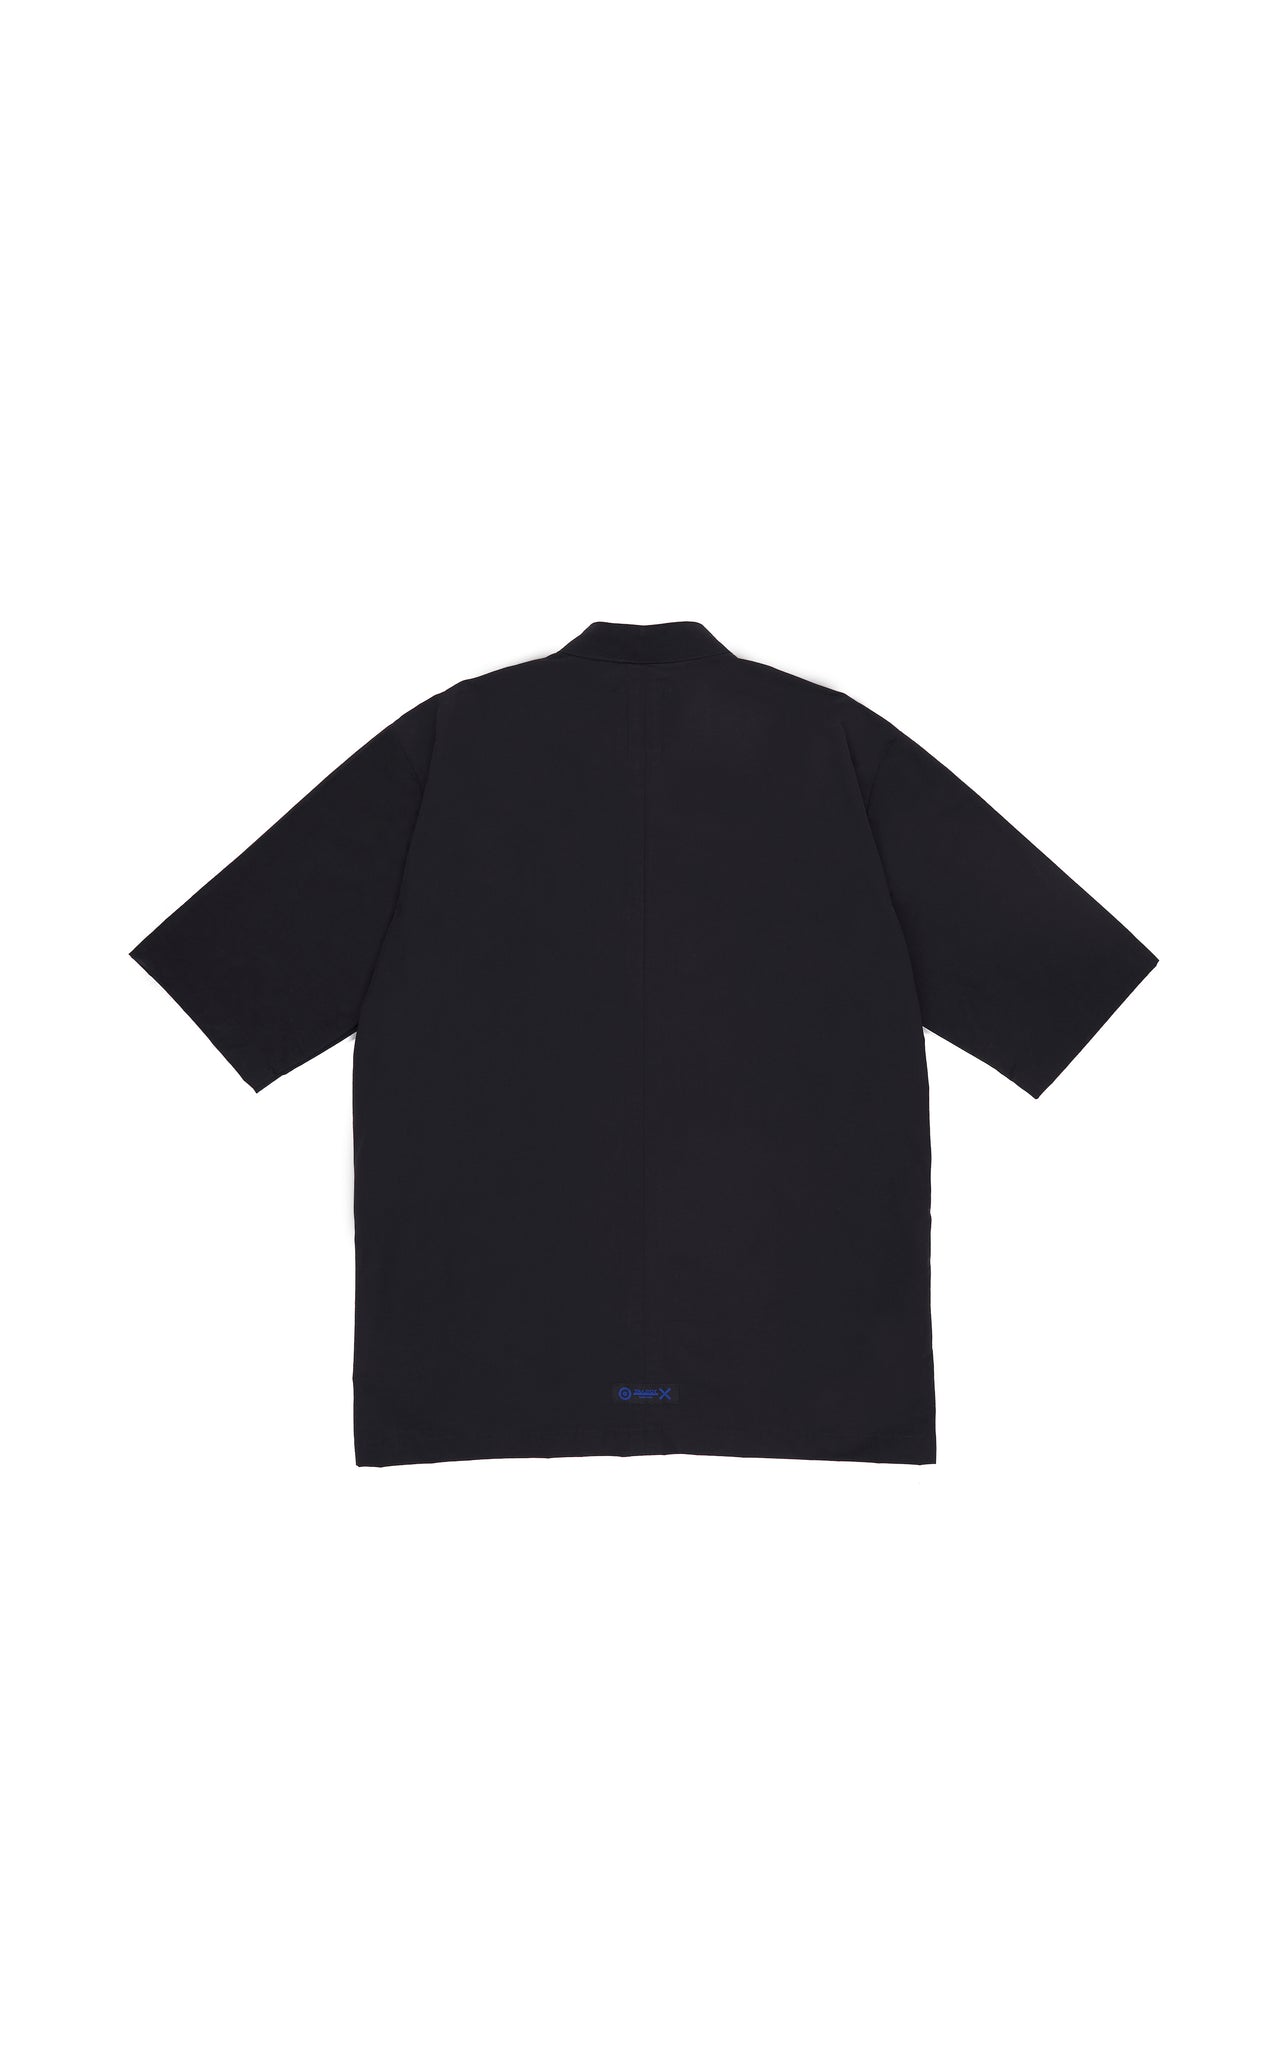 1. "ATREIDES" Black HD-Cotton Overshirt